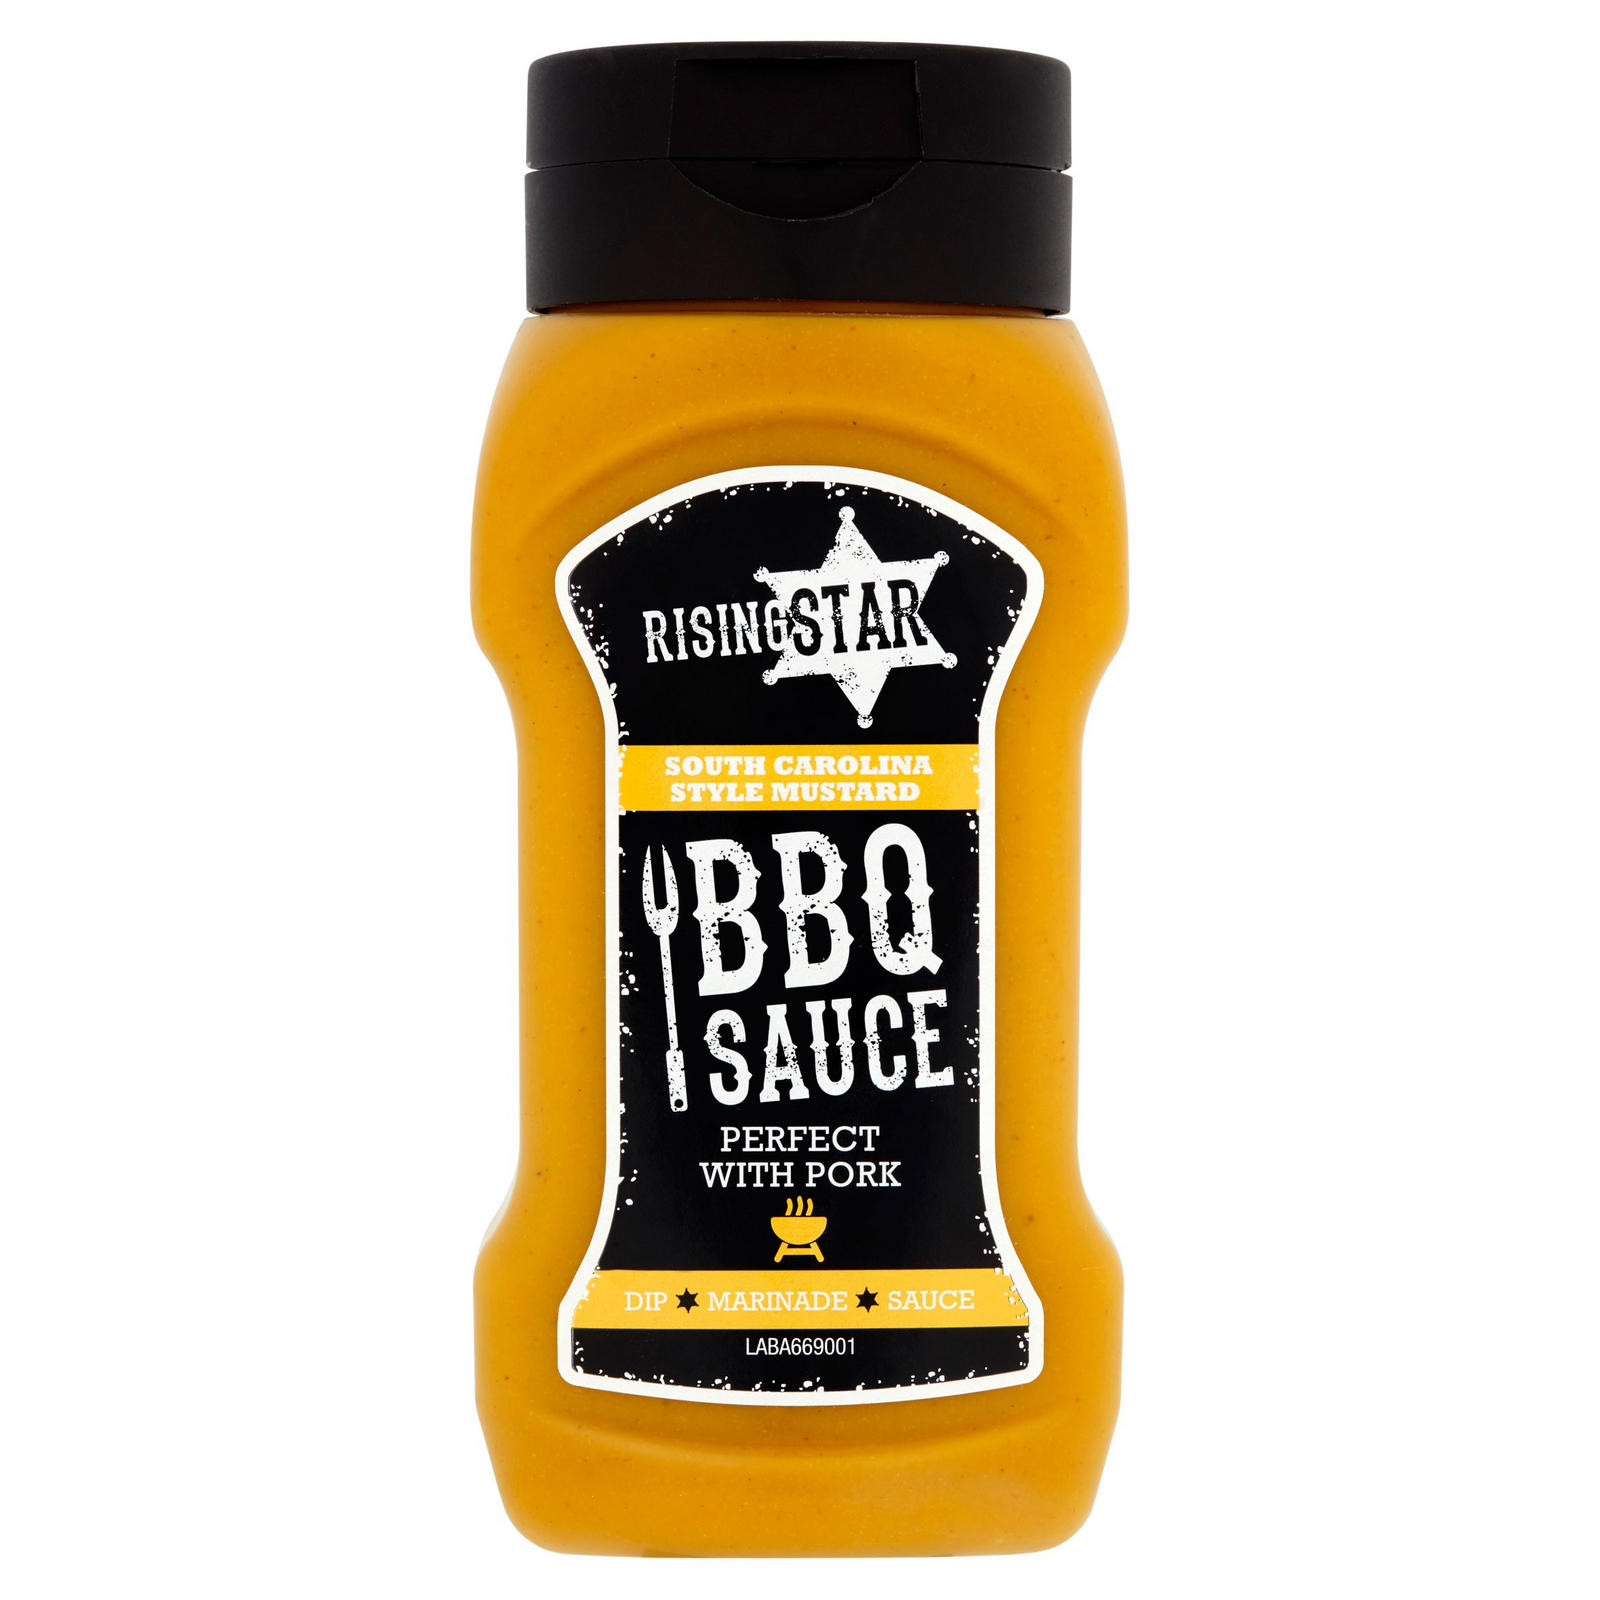 South Carolina Bbq Sauce Best Of Rising Star south Carolina Style Mustard Bbq Sauce 350g